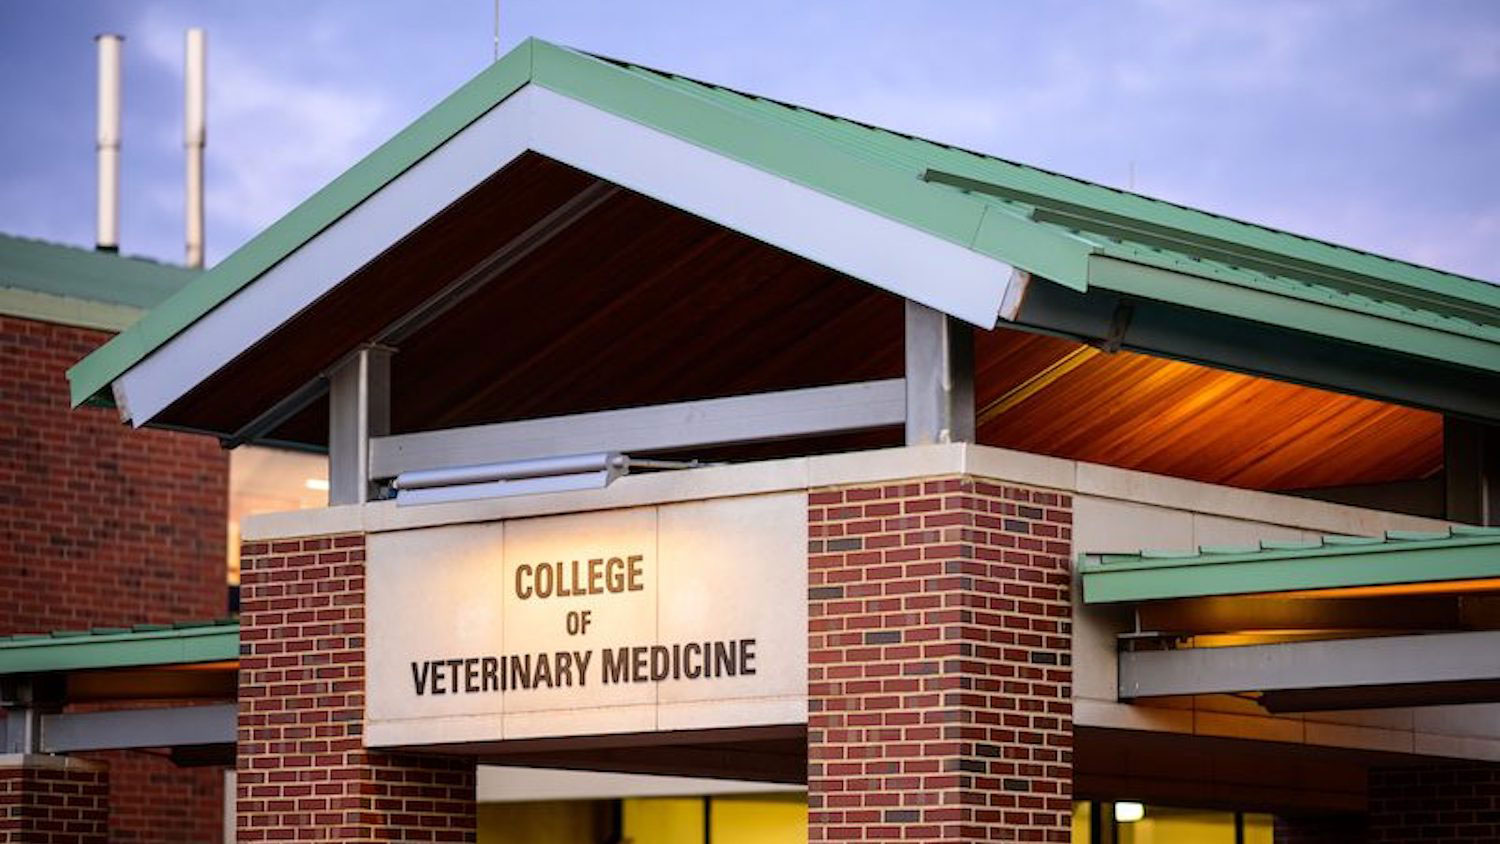 College of Veterinary Medicine building